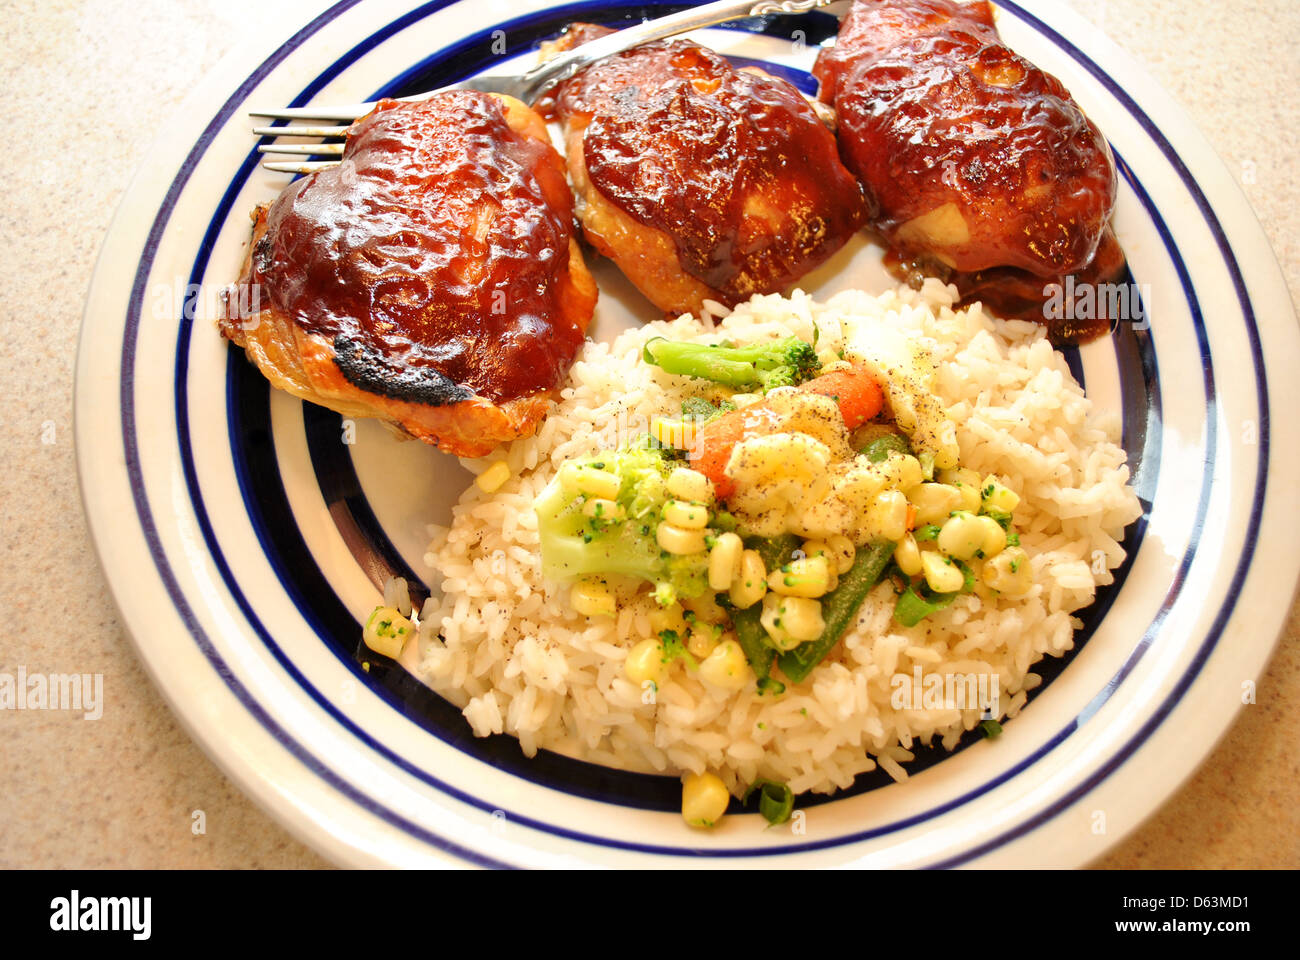 BBQ Chicken with Rice and Veggies Stock Photo